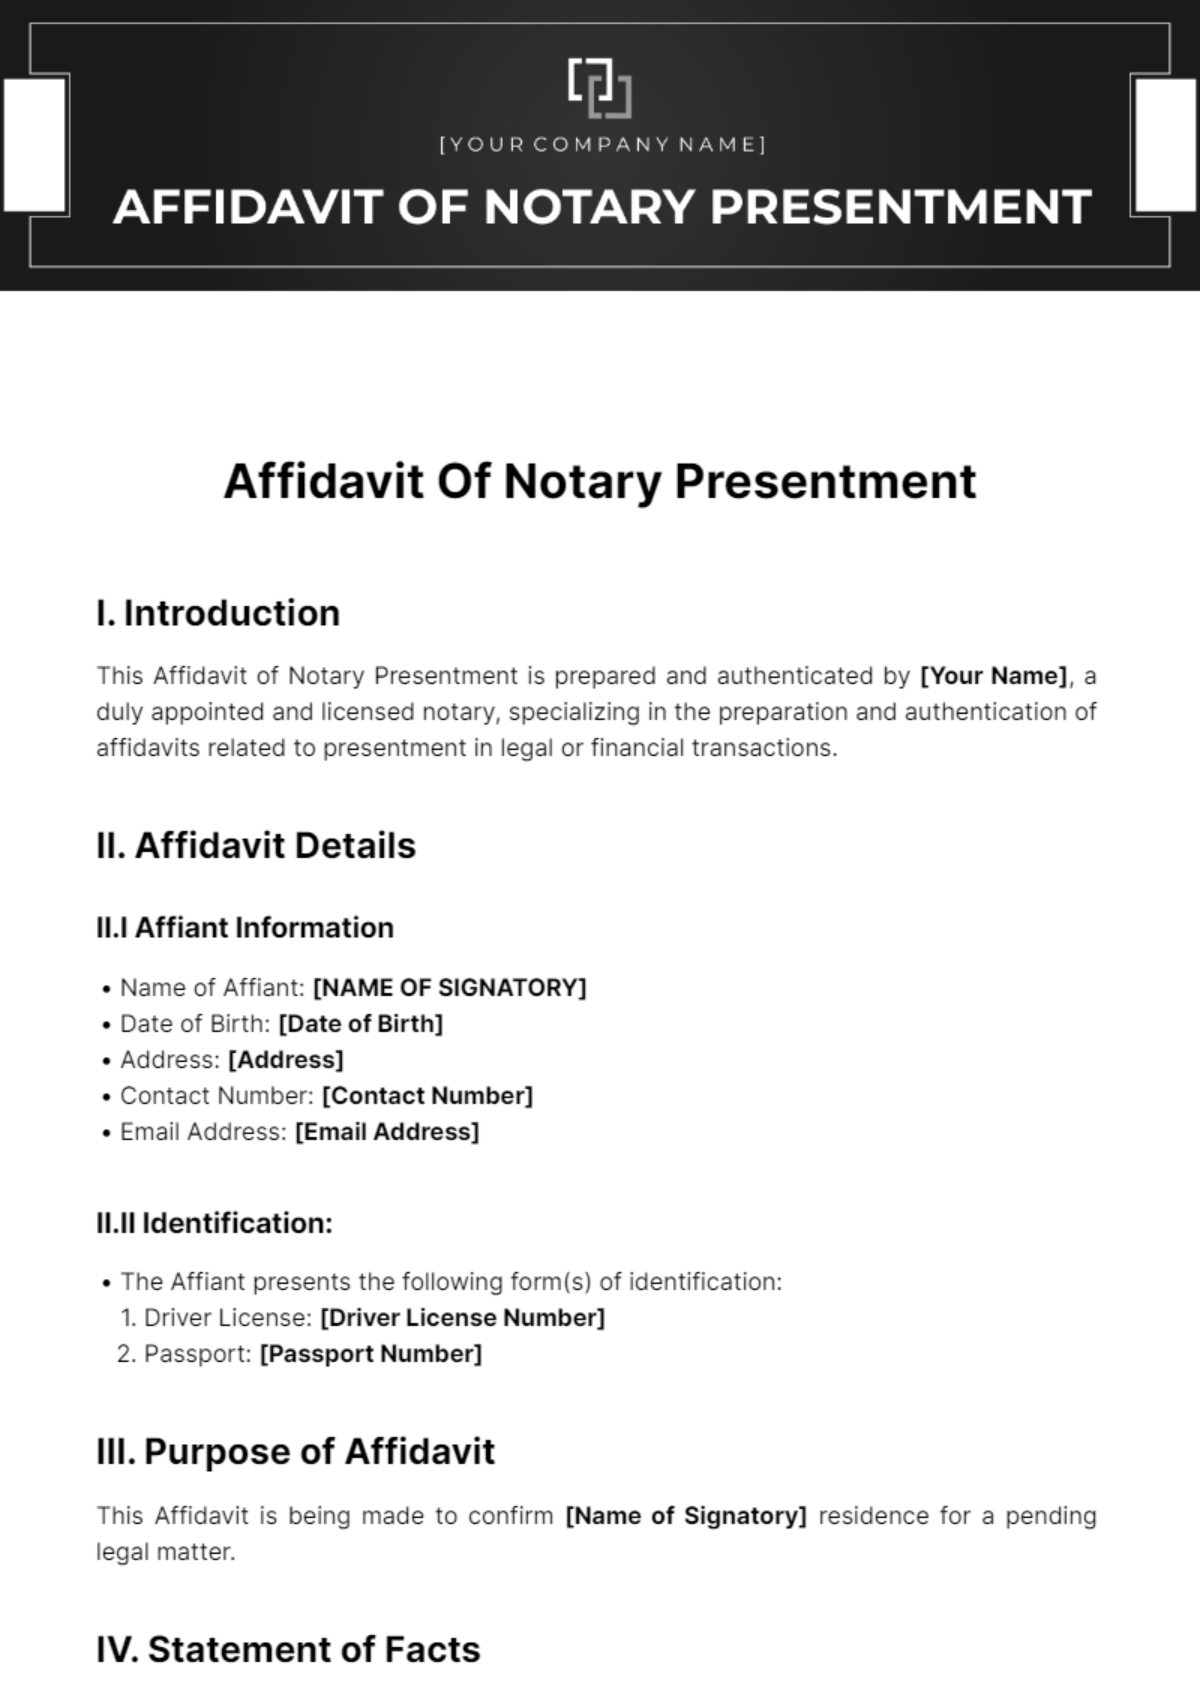 Affidavit Of Notary Presentment Template